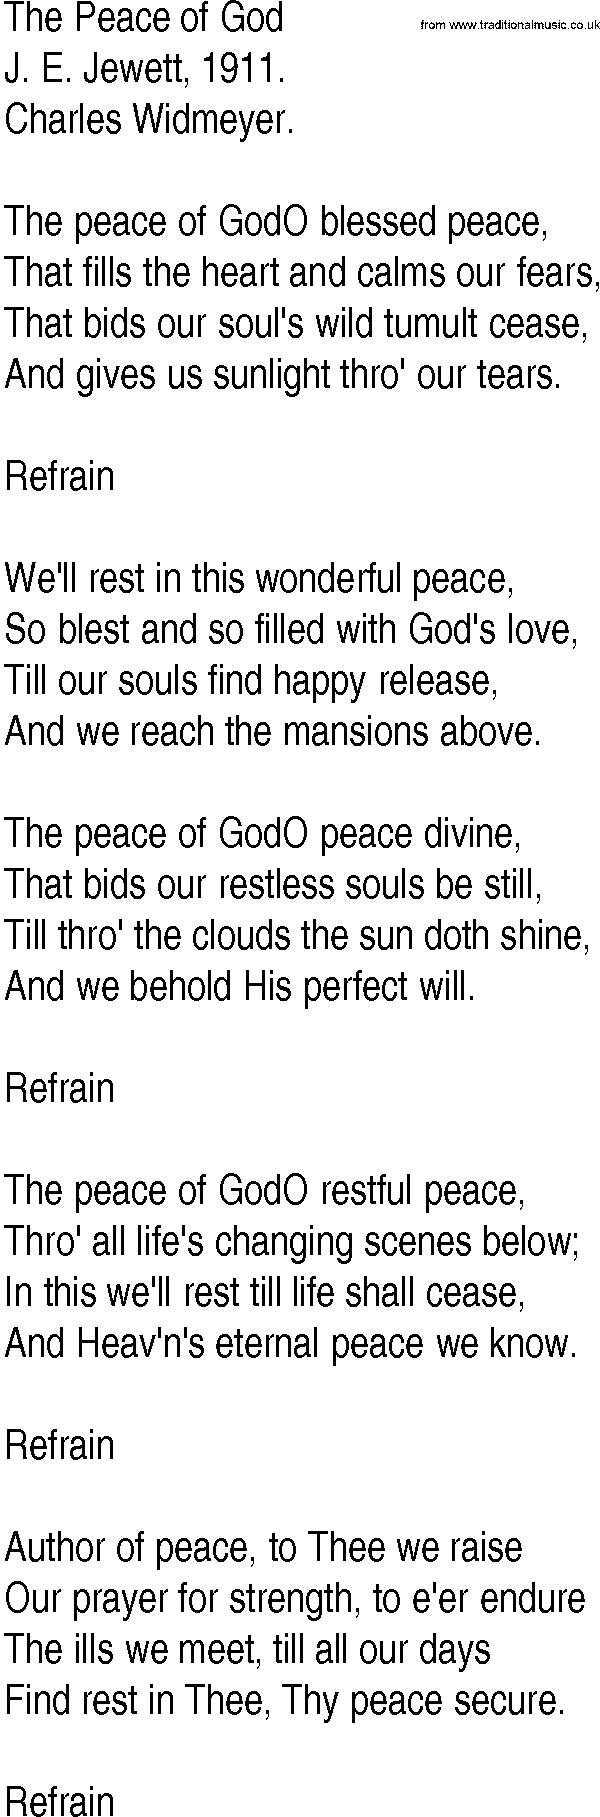 Hymn and Gospel Song: The Peace of God by J E Jewett lyrics